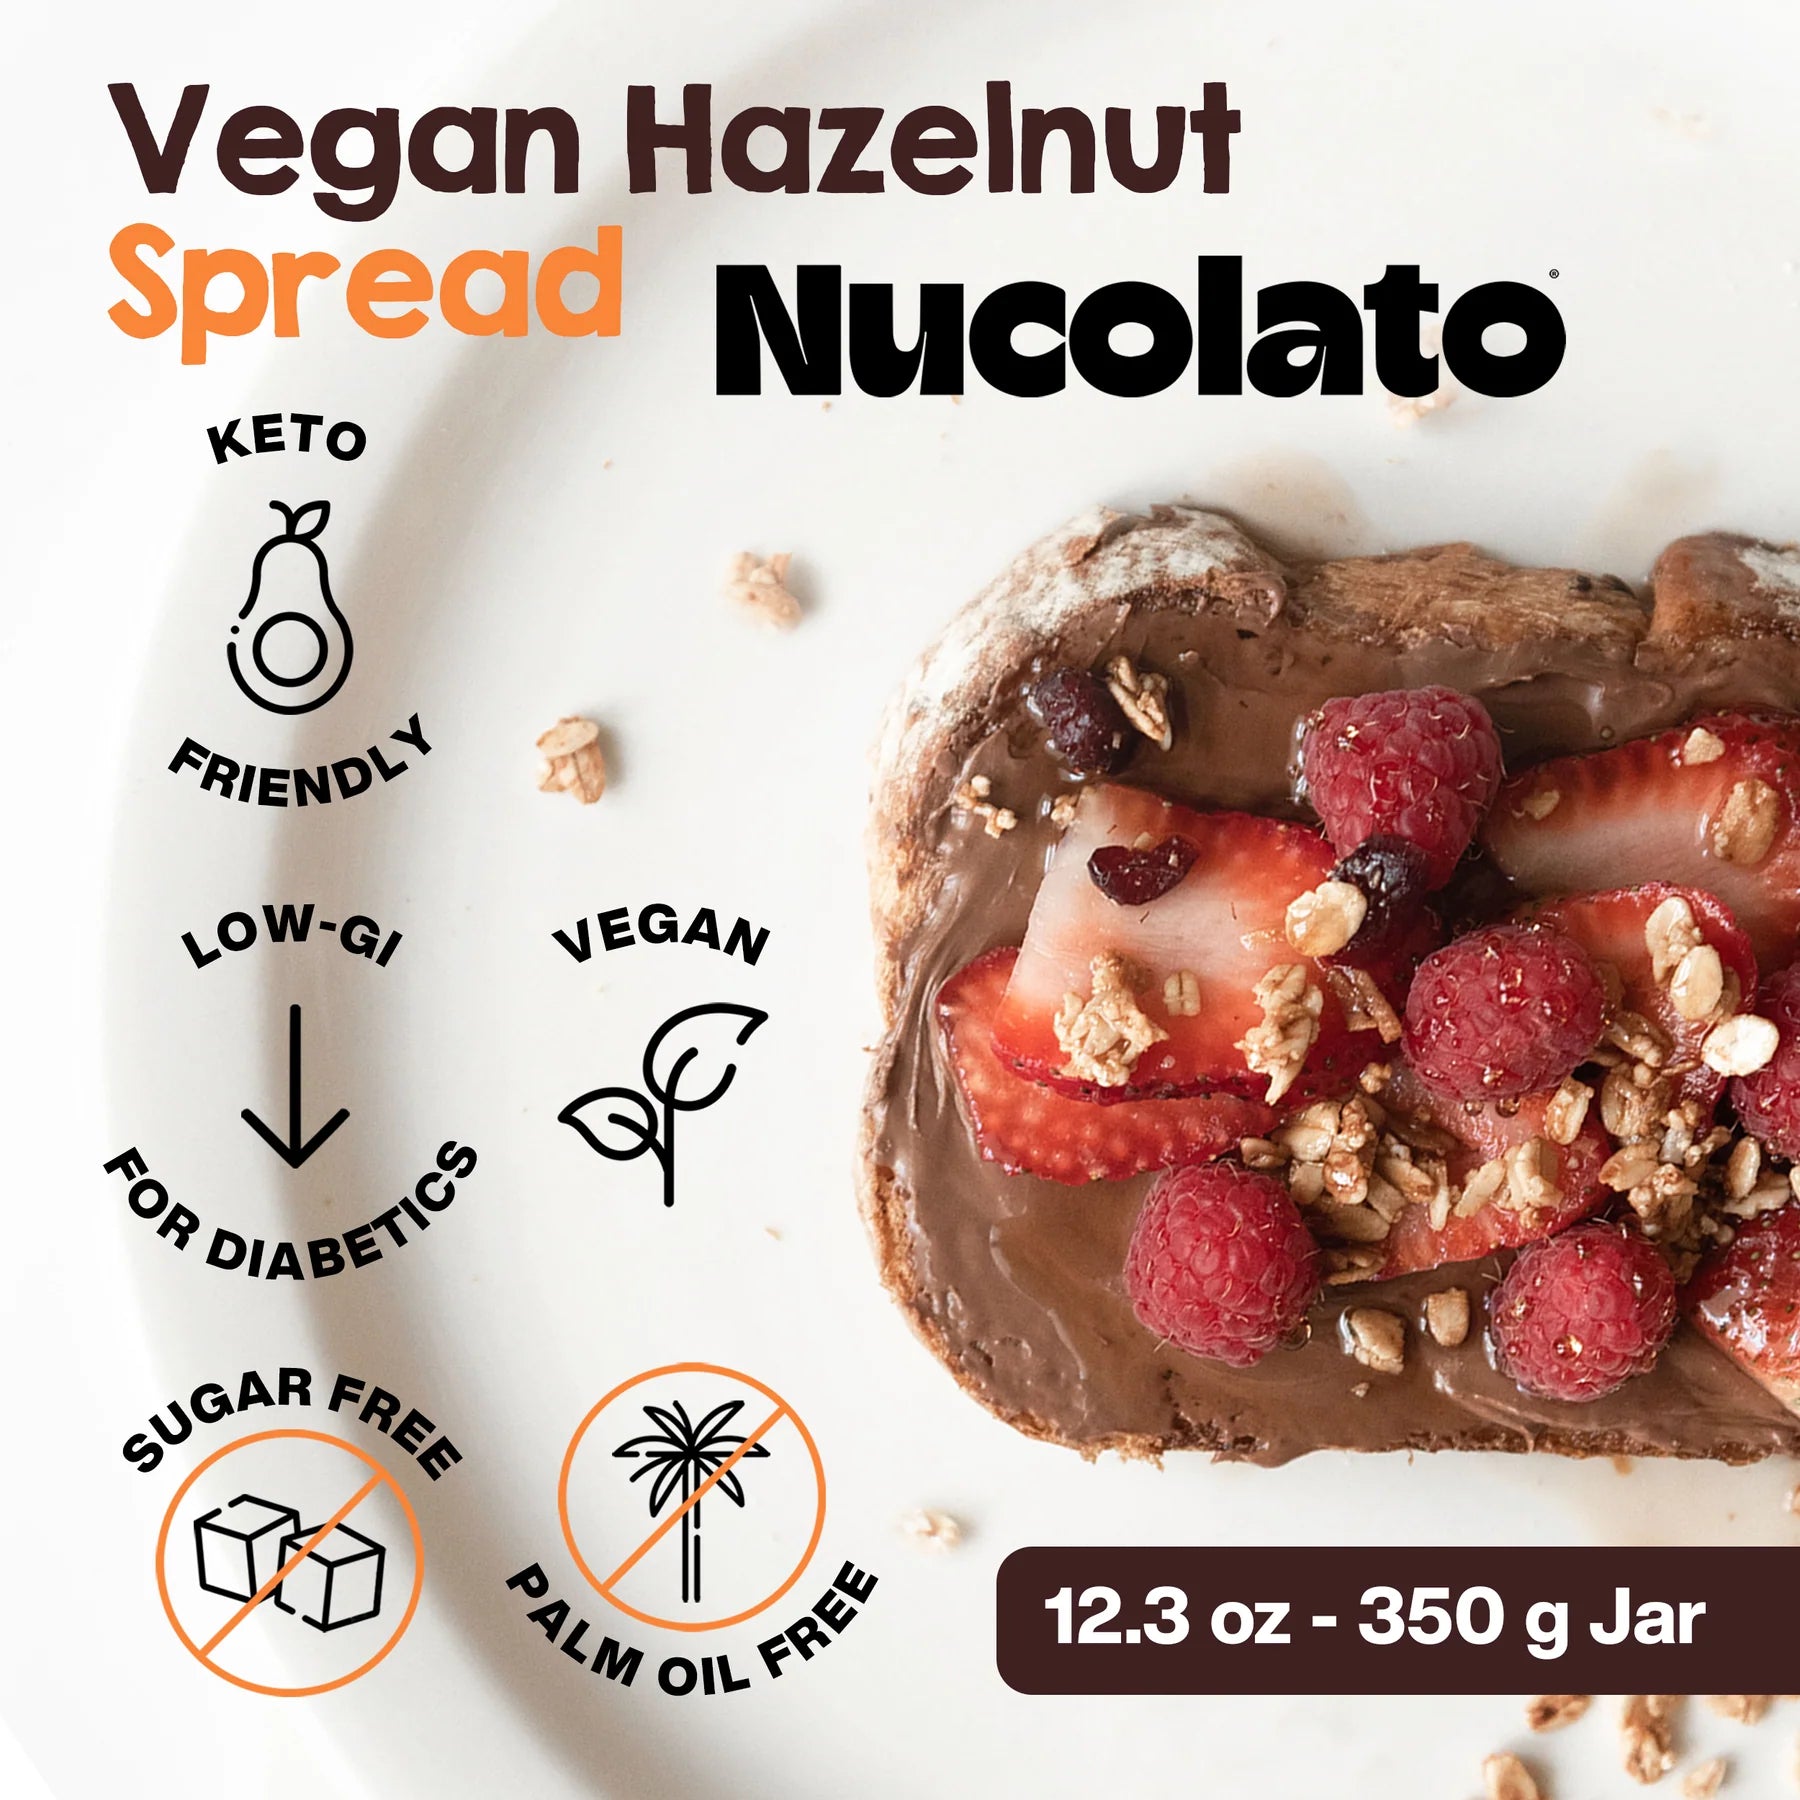 Nucolato Vegan Hazelnut Spread